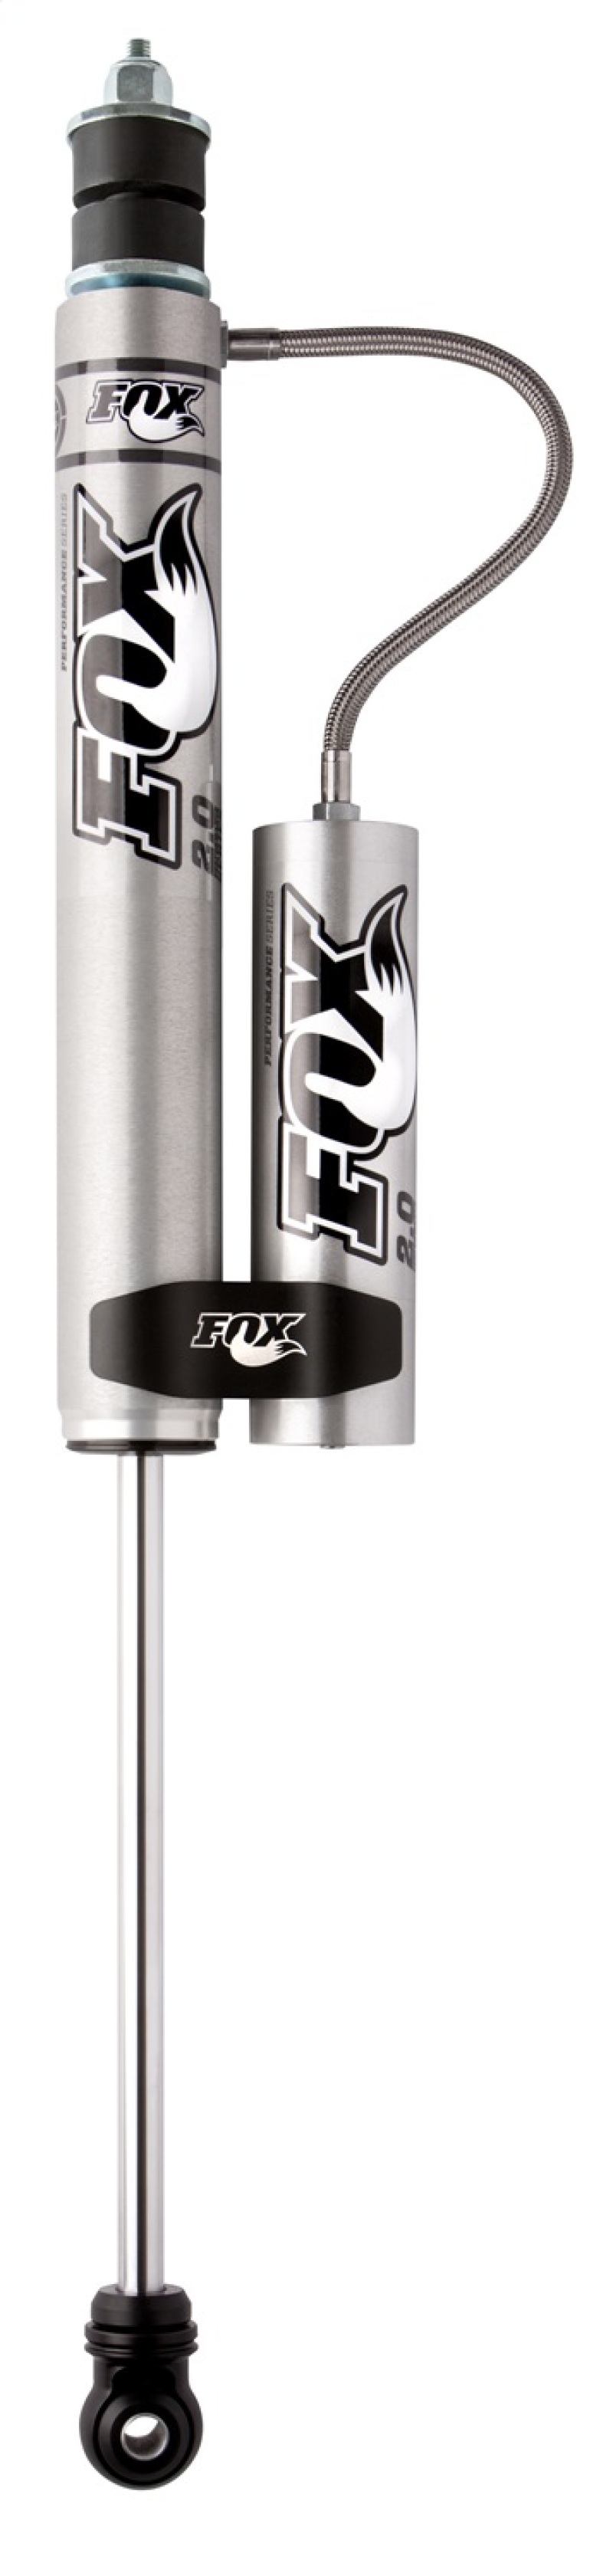 Fox Shox 985-24-052 2.0 Performance Series Smooth Body Reservoir Shock